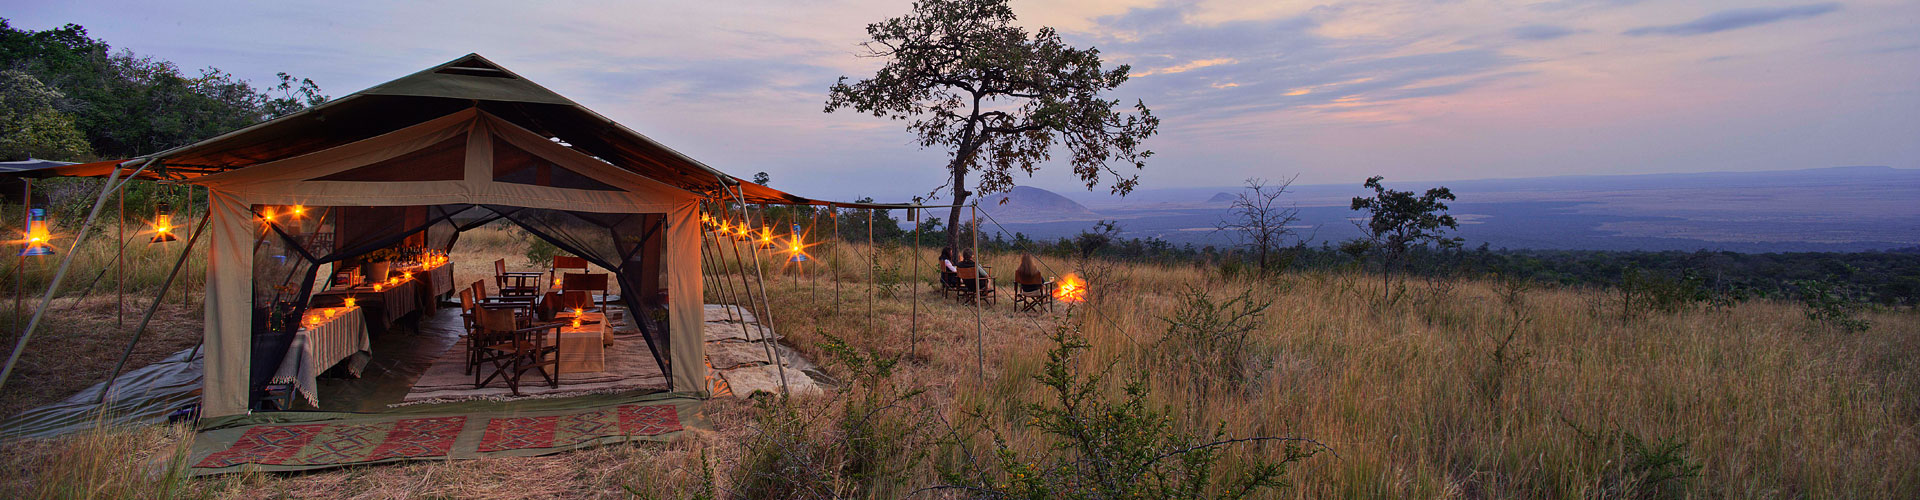 African Mobile Safaris